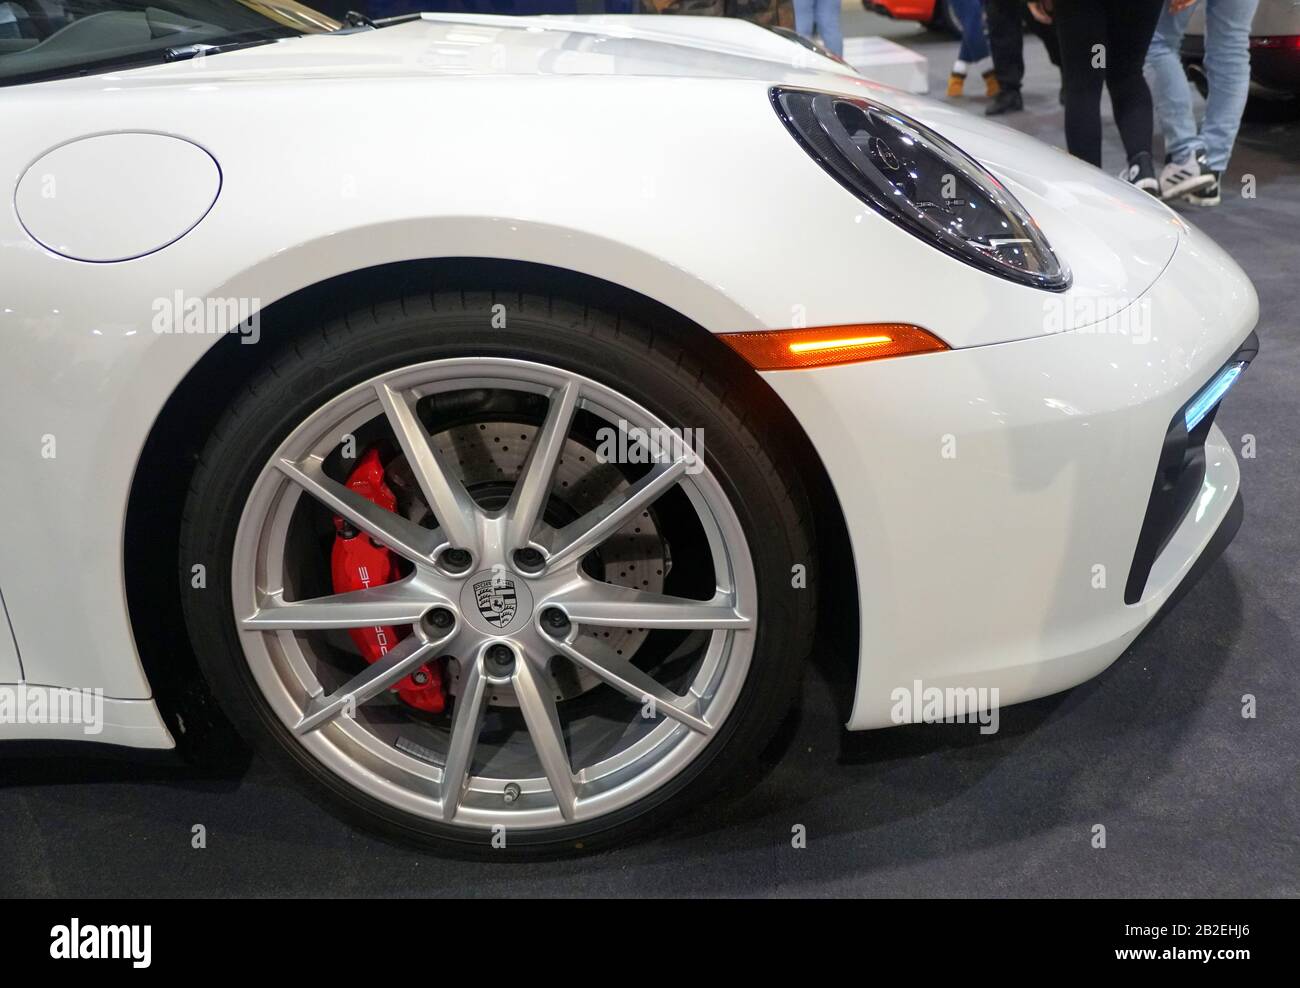 Philadelphia, Pennsylvania, U.S.A - February 9, 2020 - The side view and sports wheel of a 2020 Porsche 911 Carrera 4S in white color Stock Photo